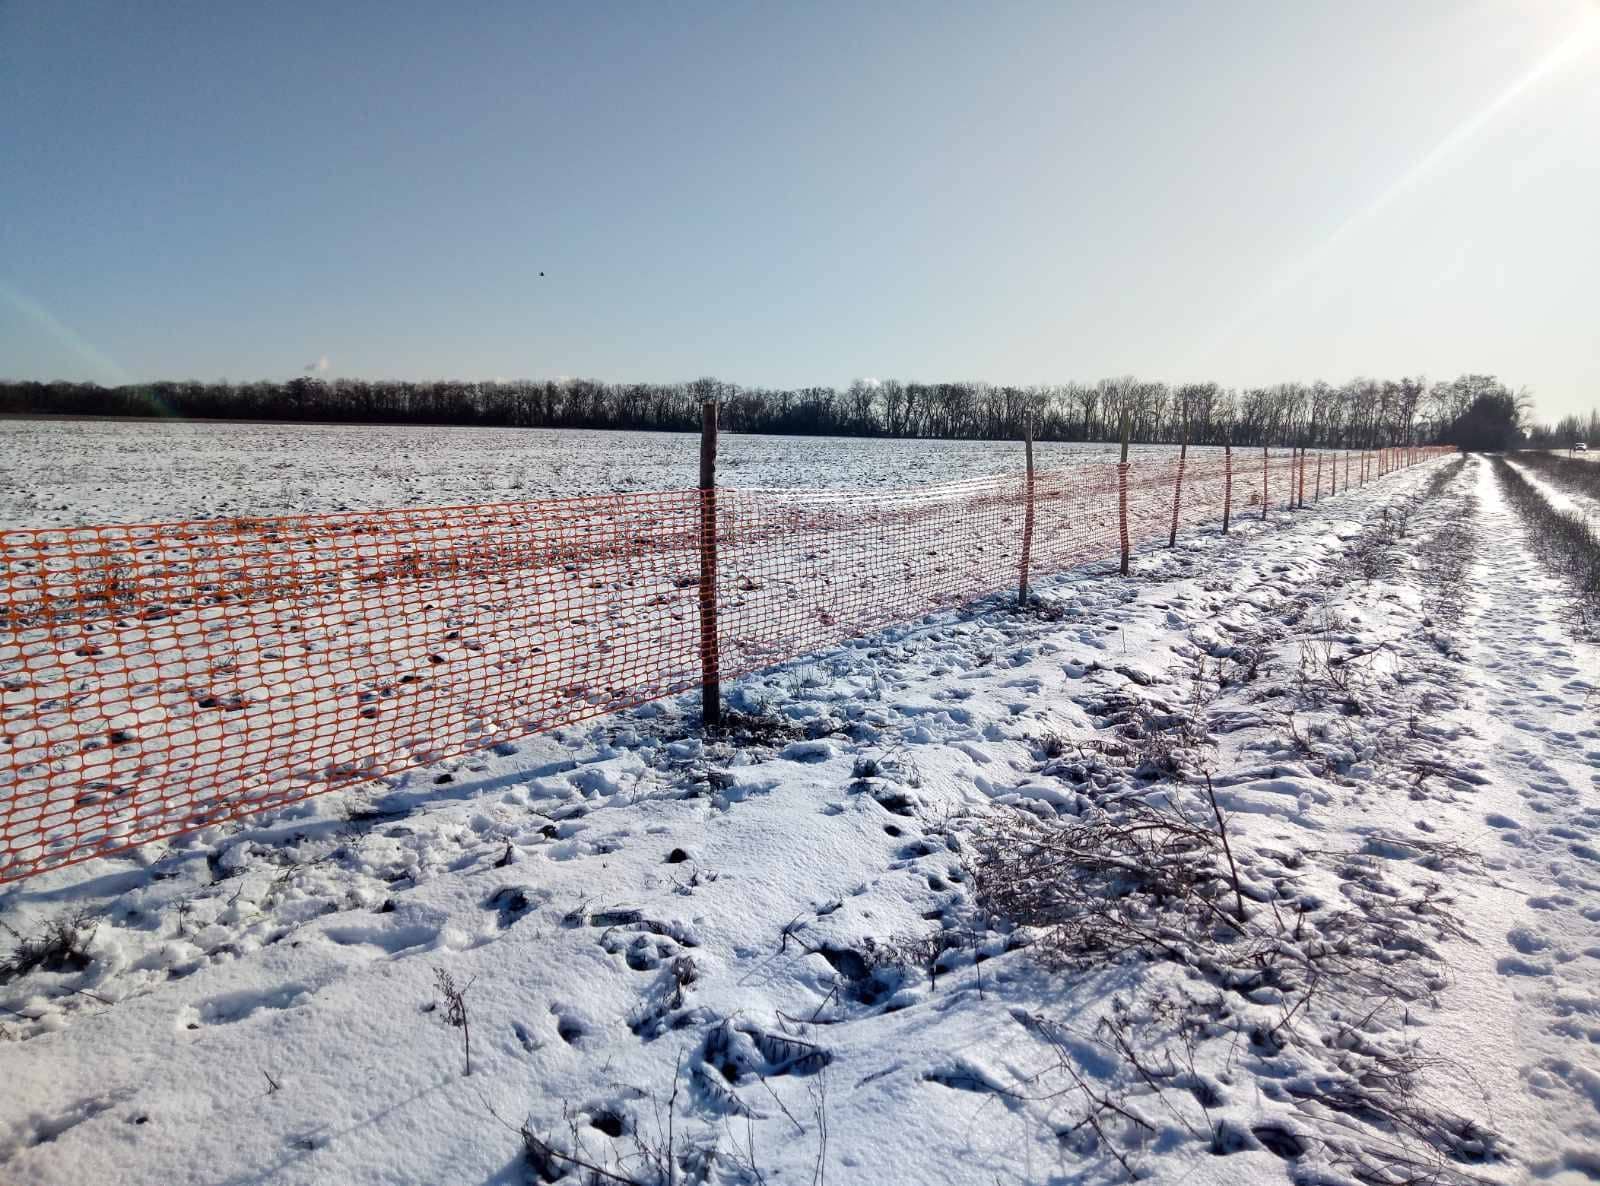 “Водителям в помощь”: на запорожских трассах устанавливают защиту от снега (ФОТО)